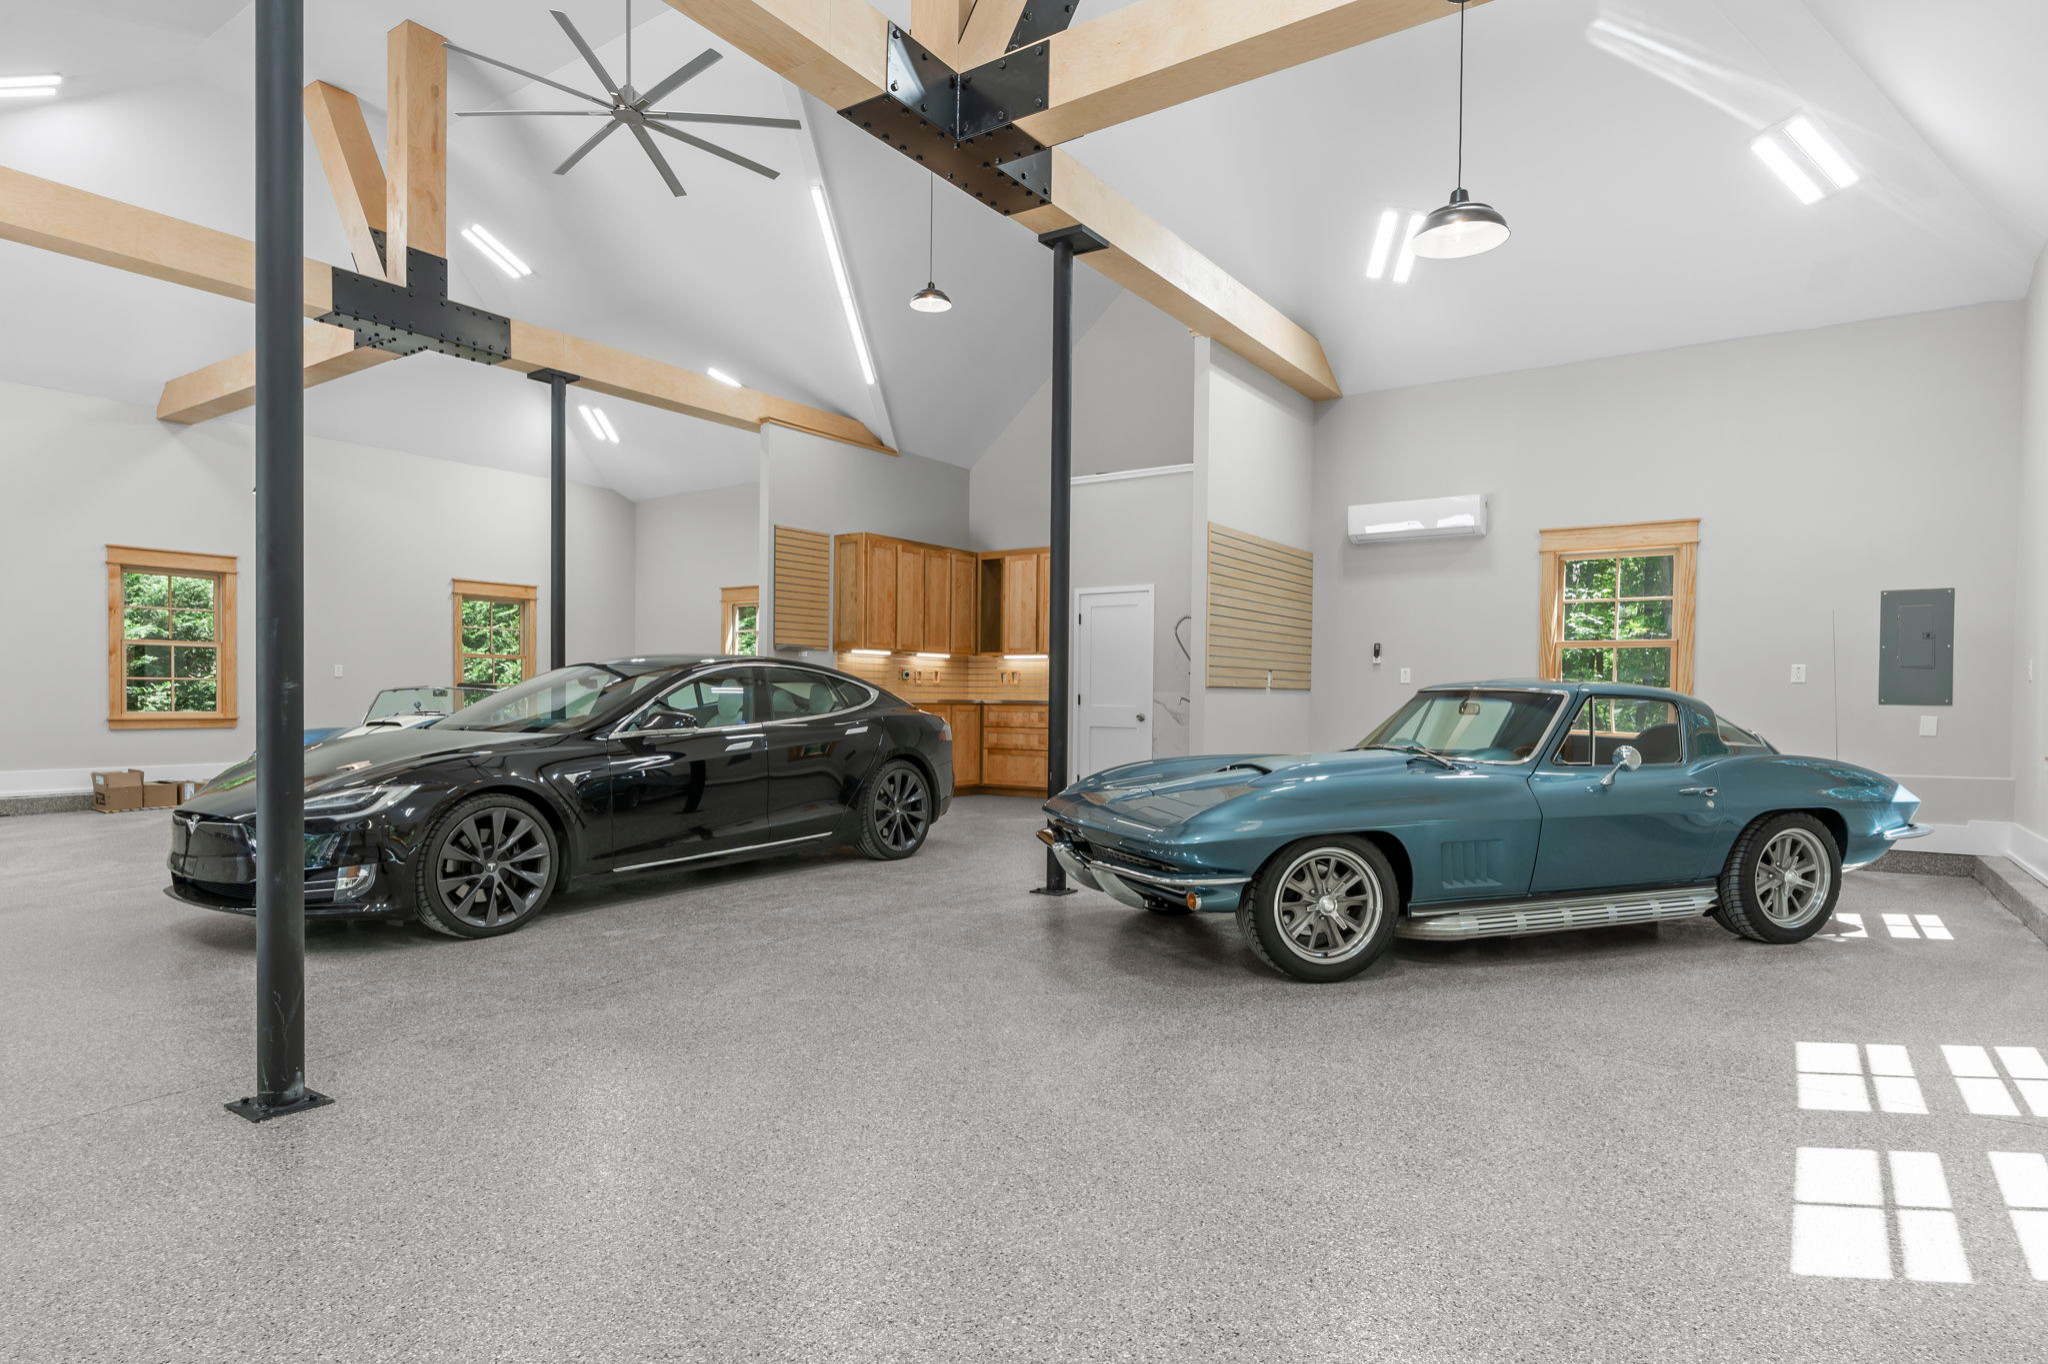 New Detached Custom Garage